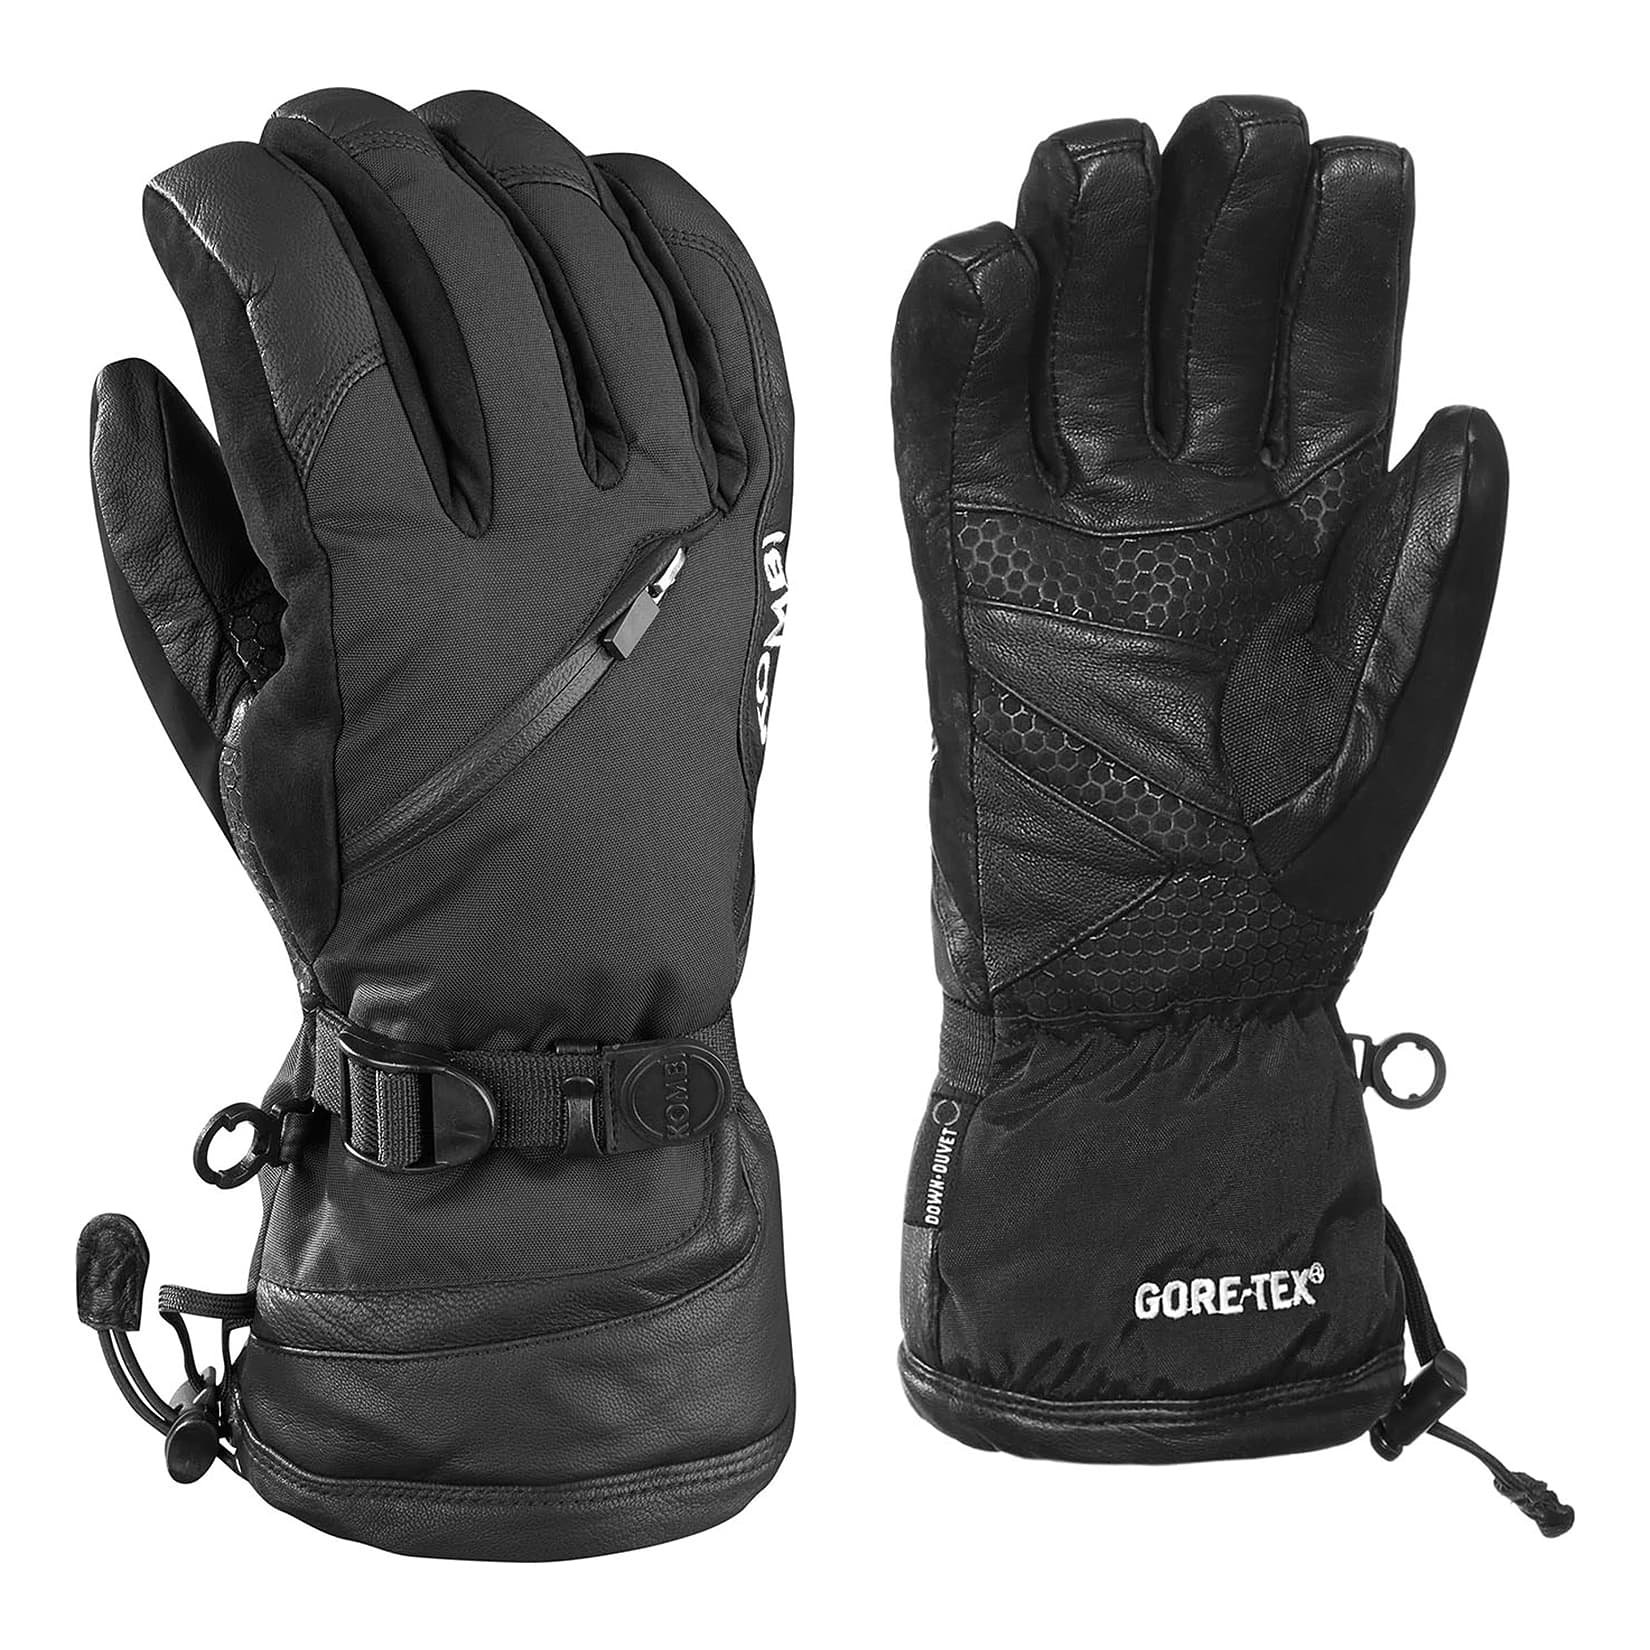 Kombi® Men’s Patroller GORE-TEX Gloves - Black